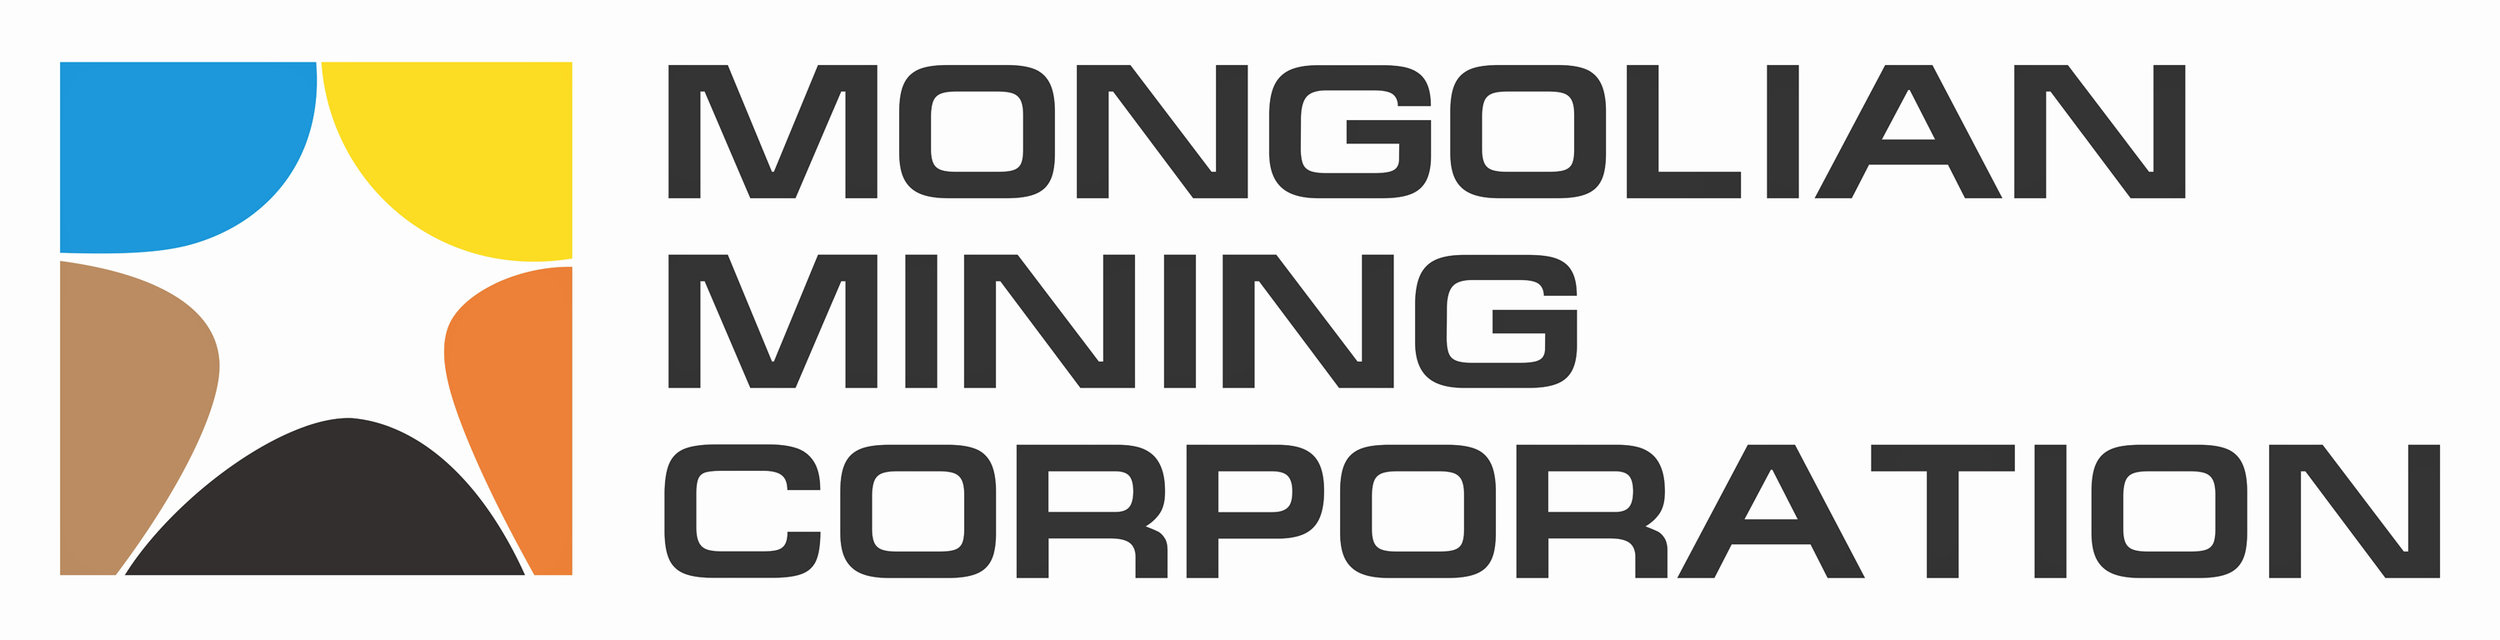 Mongolian Mining-logo.jpg